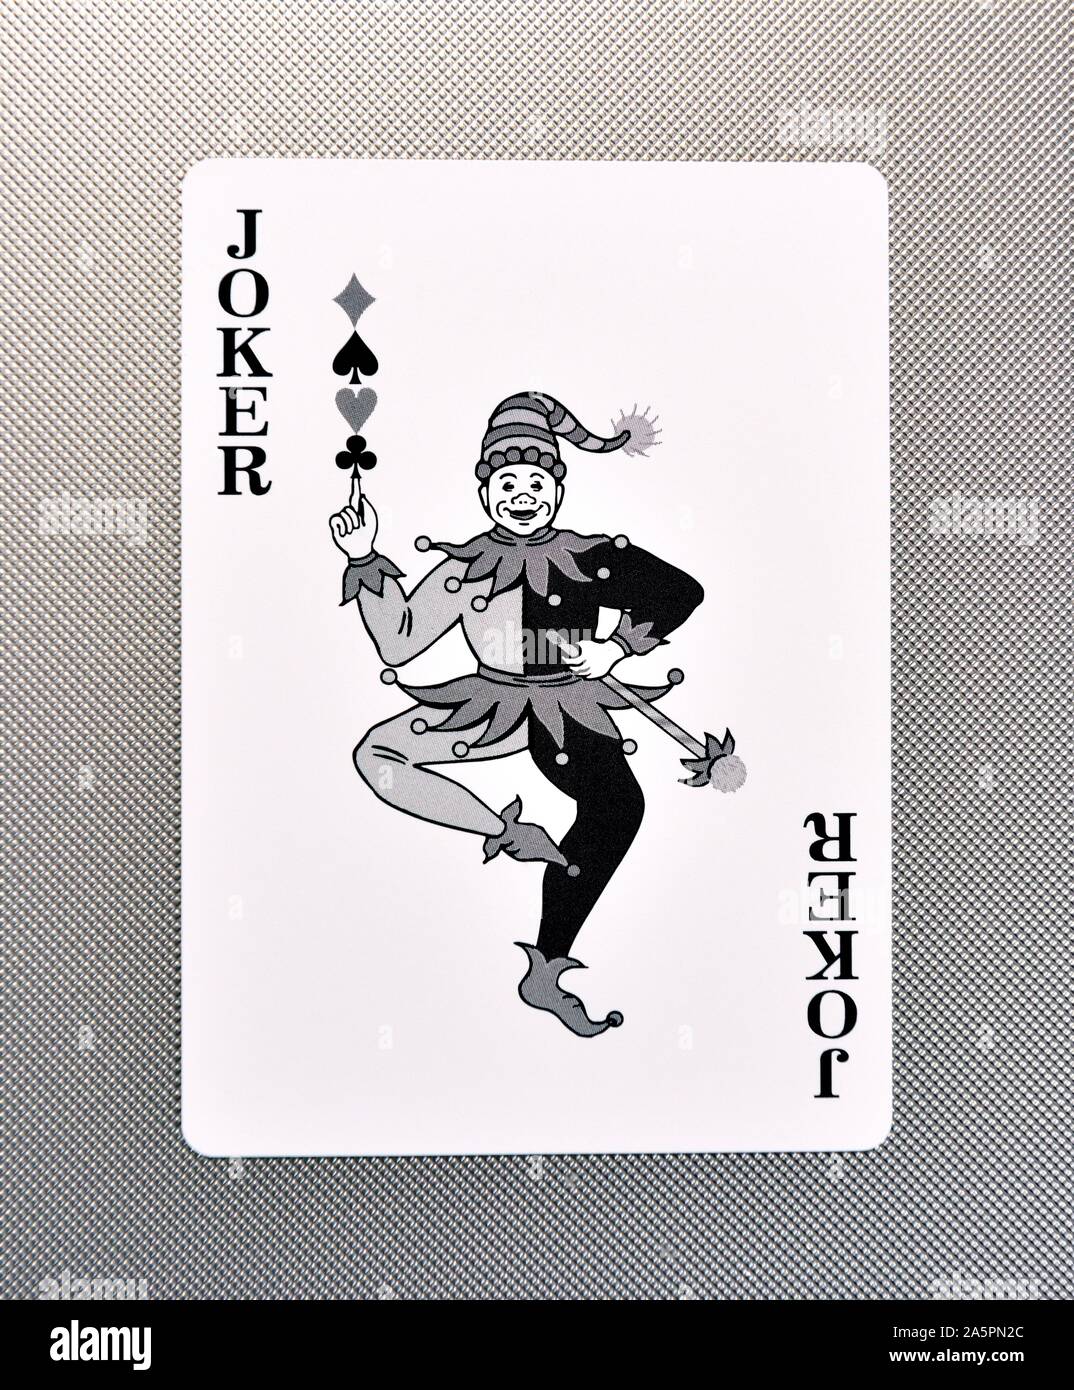 Joker Card,playing card Stock Photo